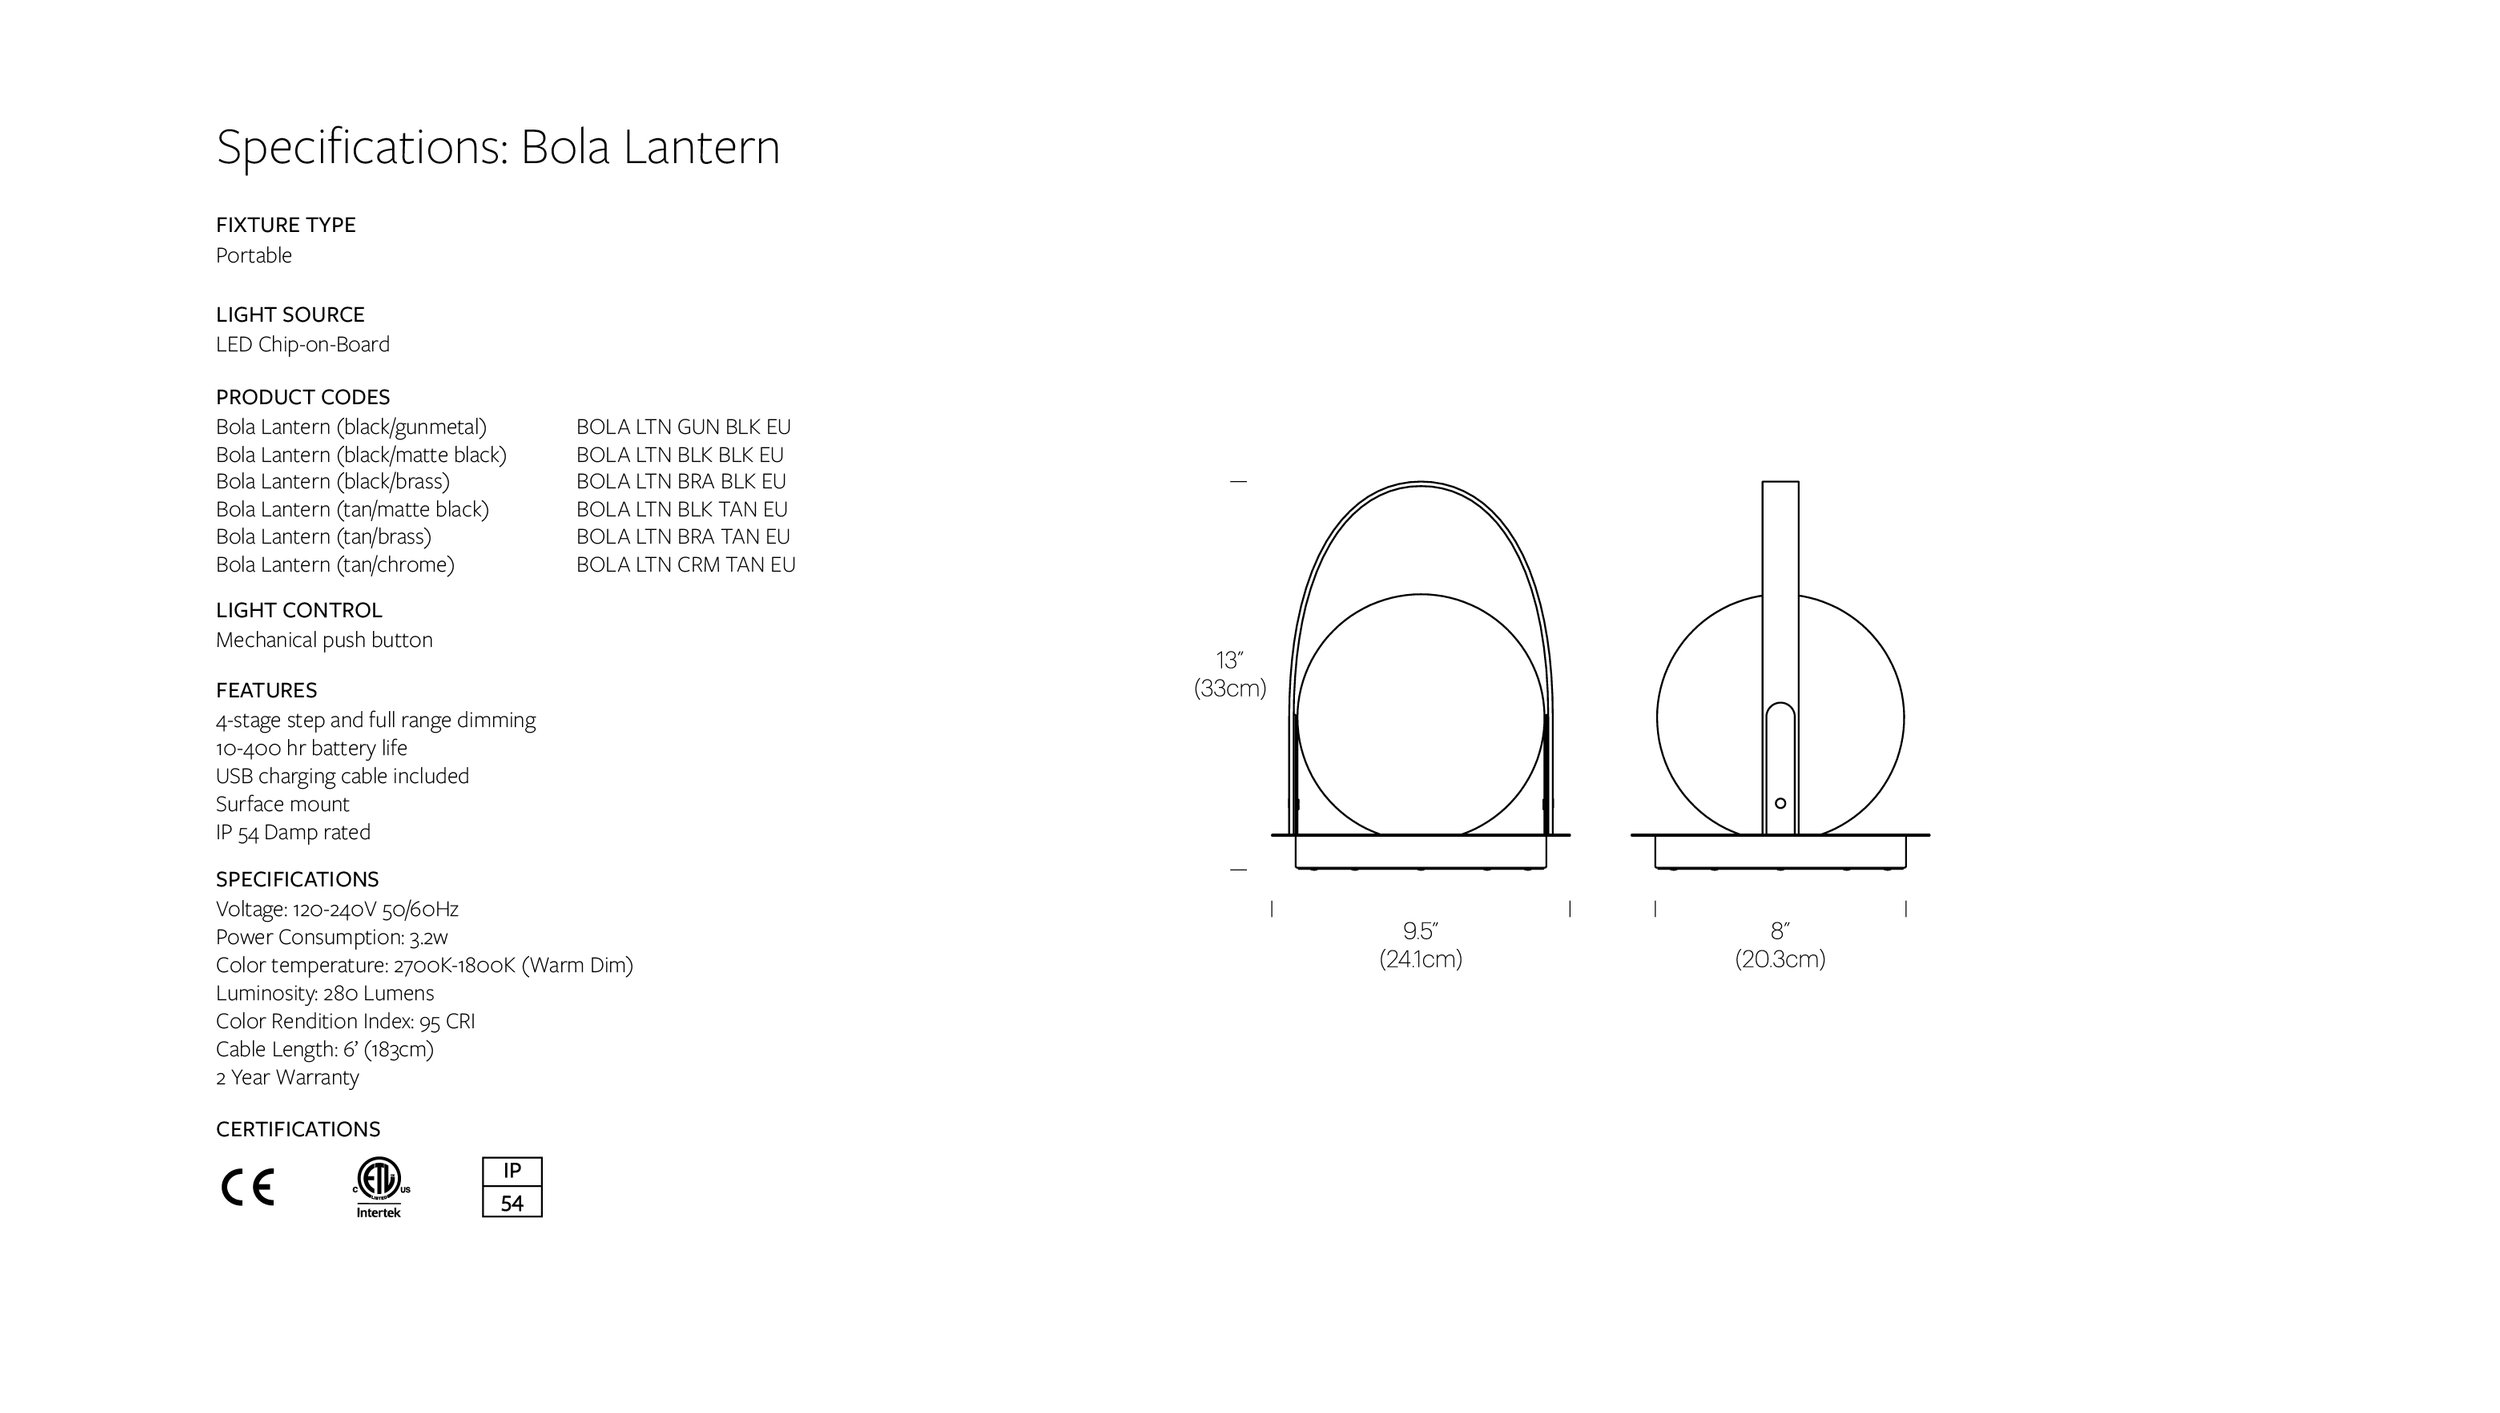 Pablo+Designs+Bola Lantern+EU+Spec+Sheet 110821-03-02.jpg